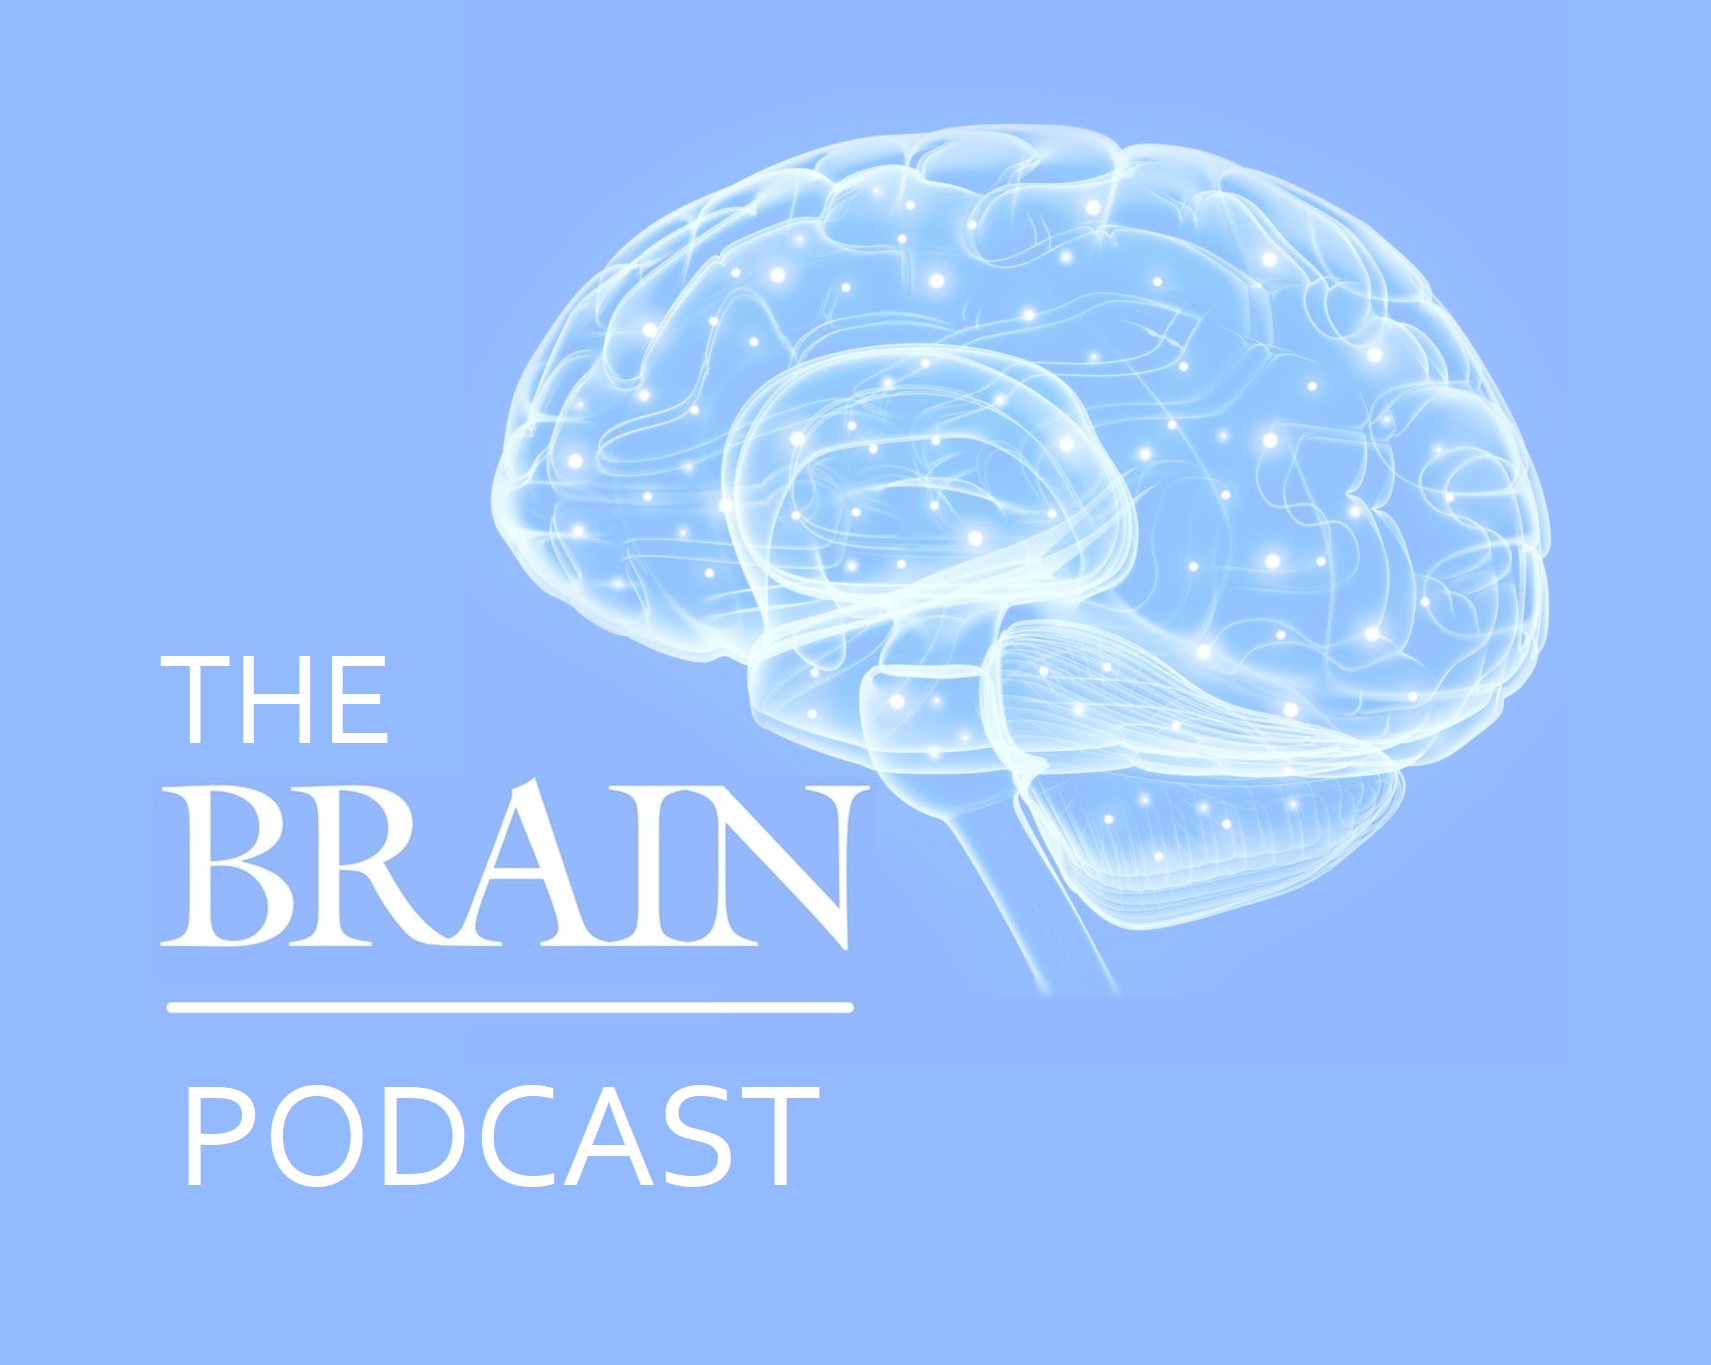 The Brain Podcast